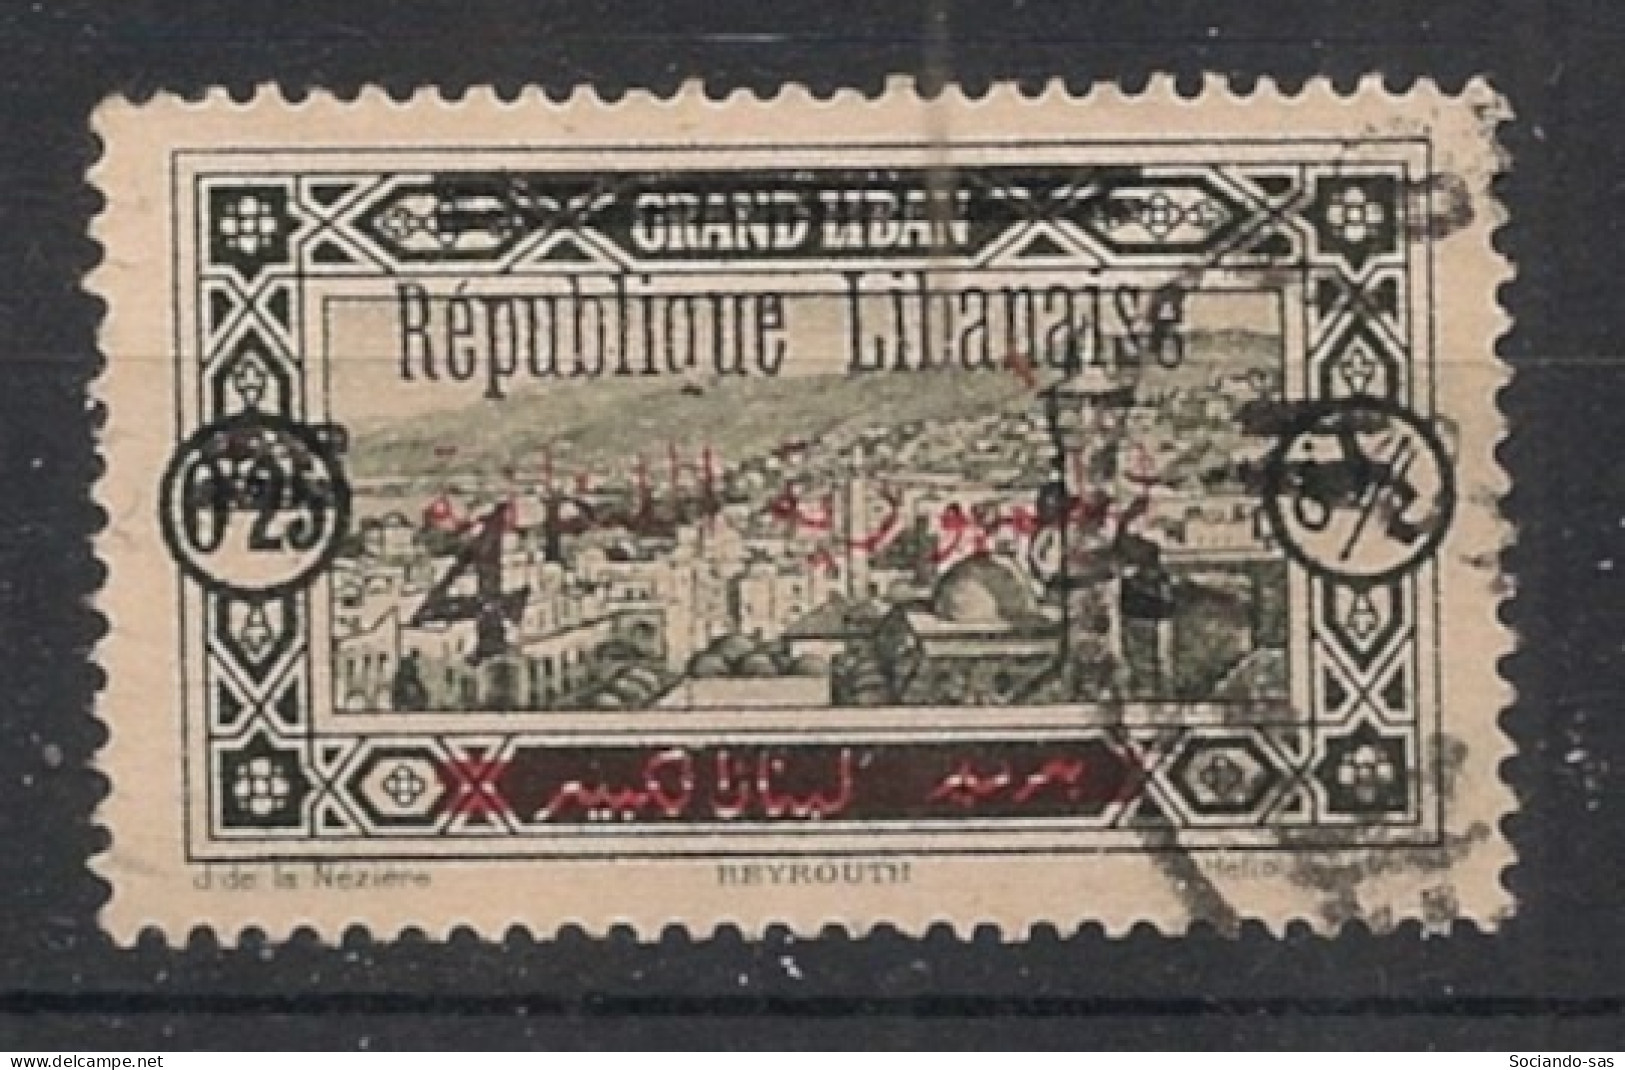 GRAND LIBAN - 1928 - N°YT. 104 - Beyrouth 4pi Sur 0pi25 Vert-noir - Oblitéré / Used - Used Stamps